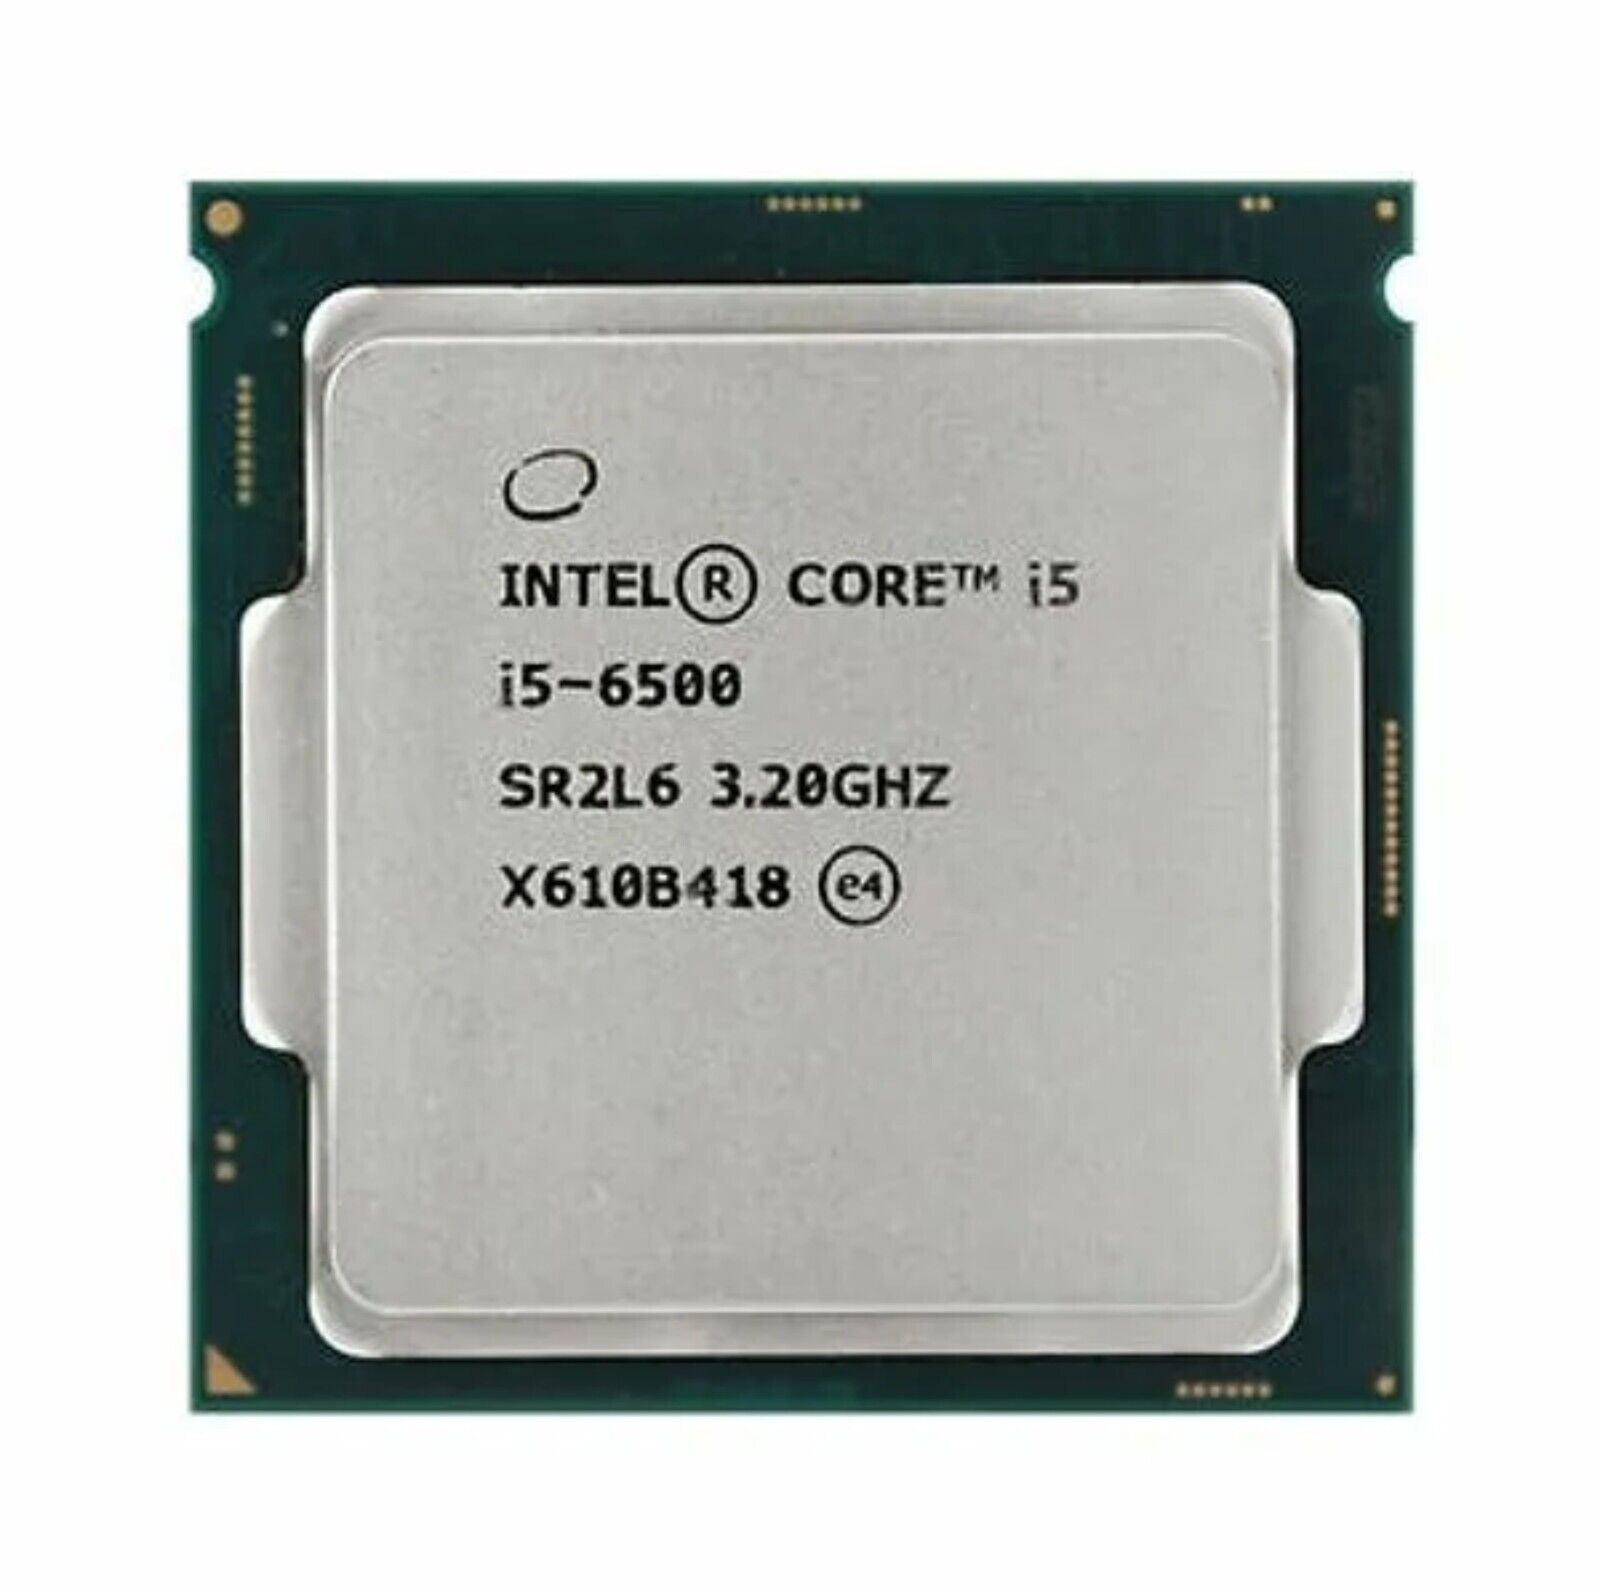 Lot of 10 Intel Core i5-6500 3.20GHZ SR2L6  Quad Core CPU  Processor